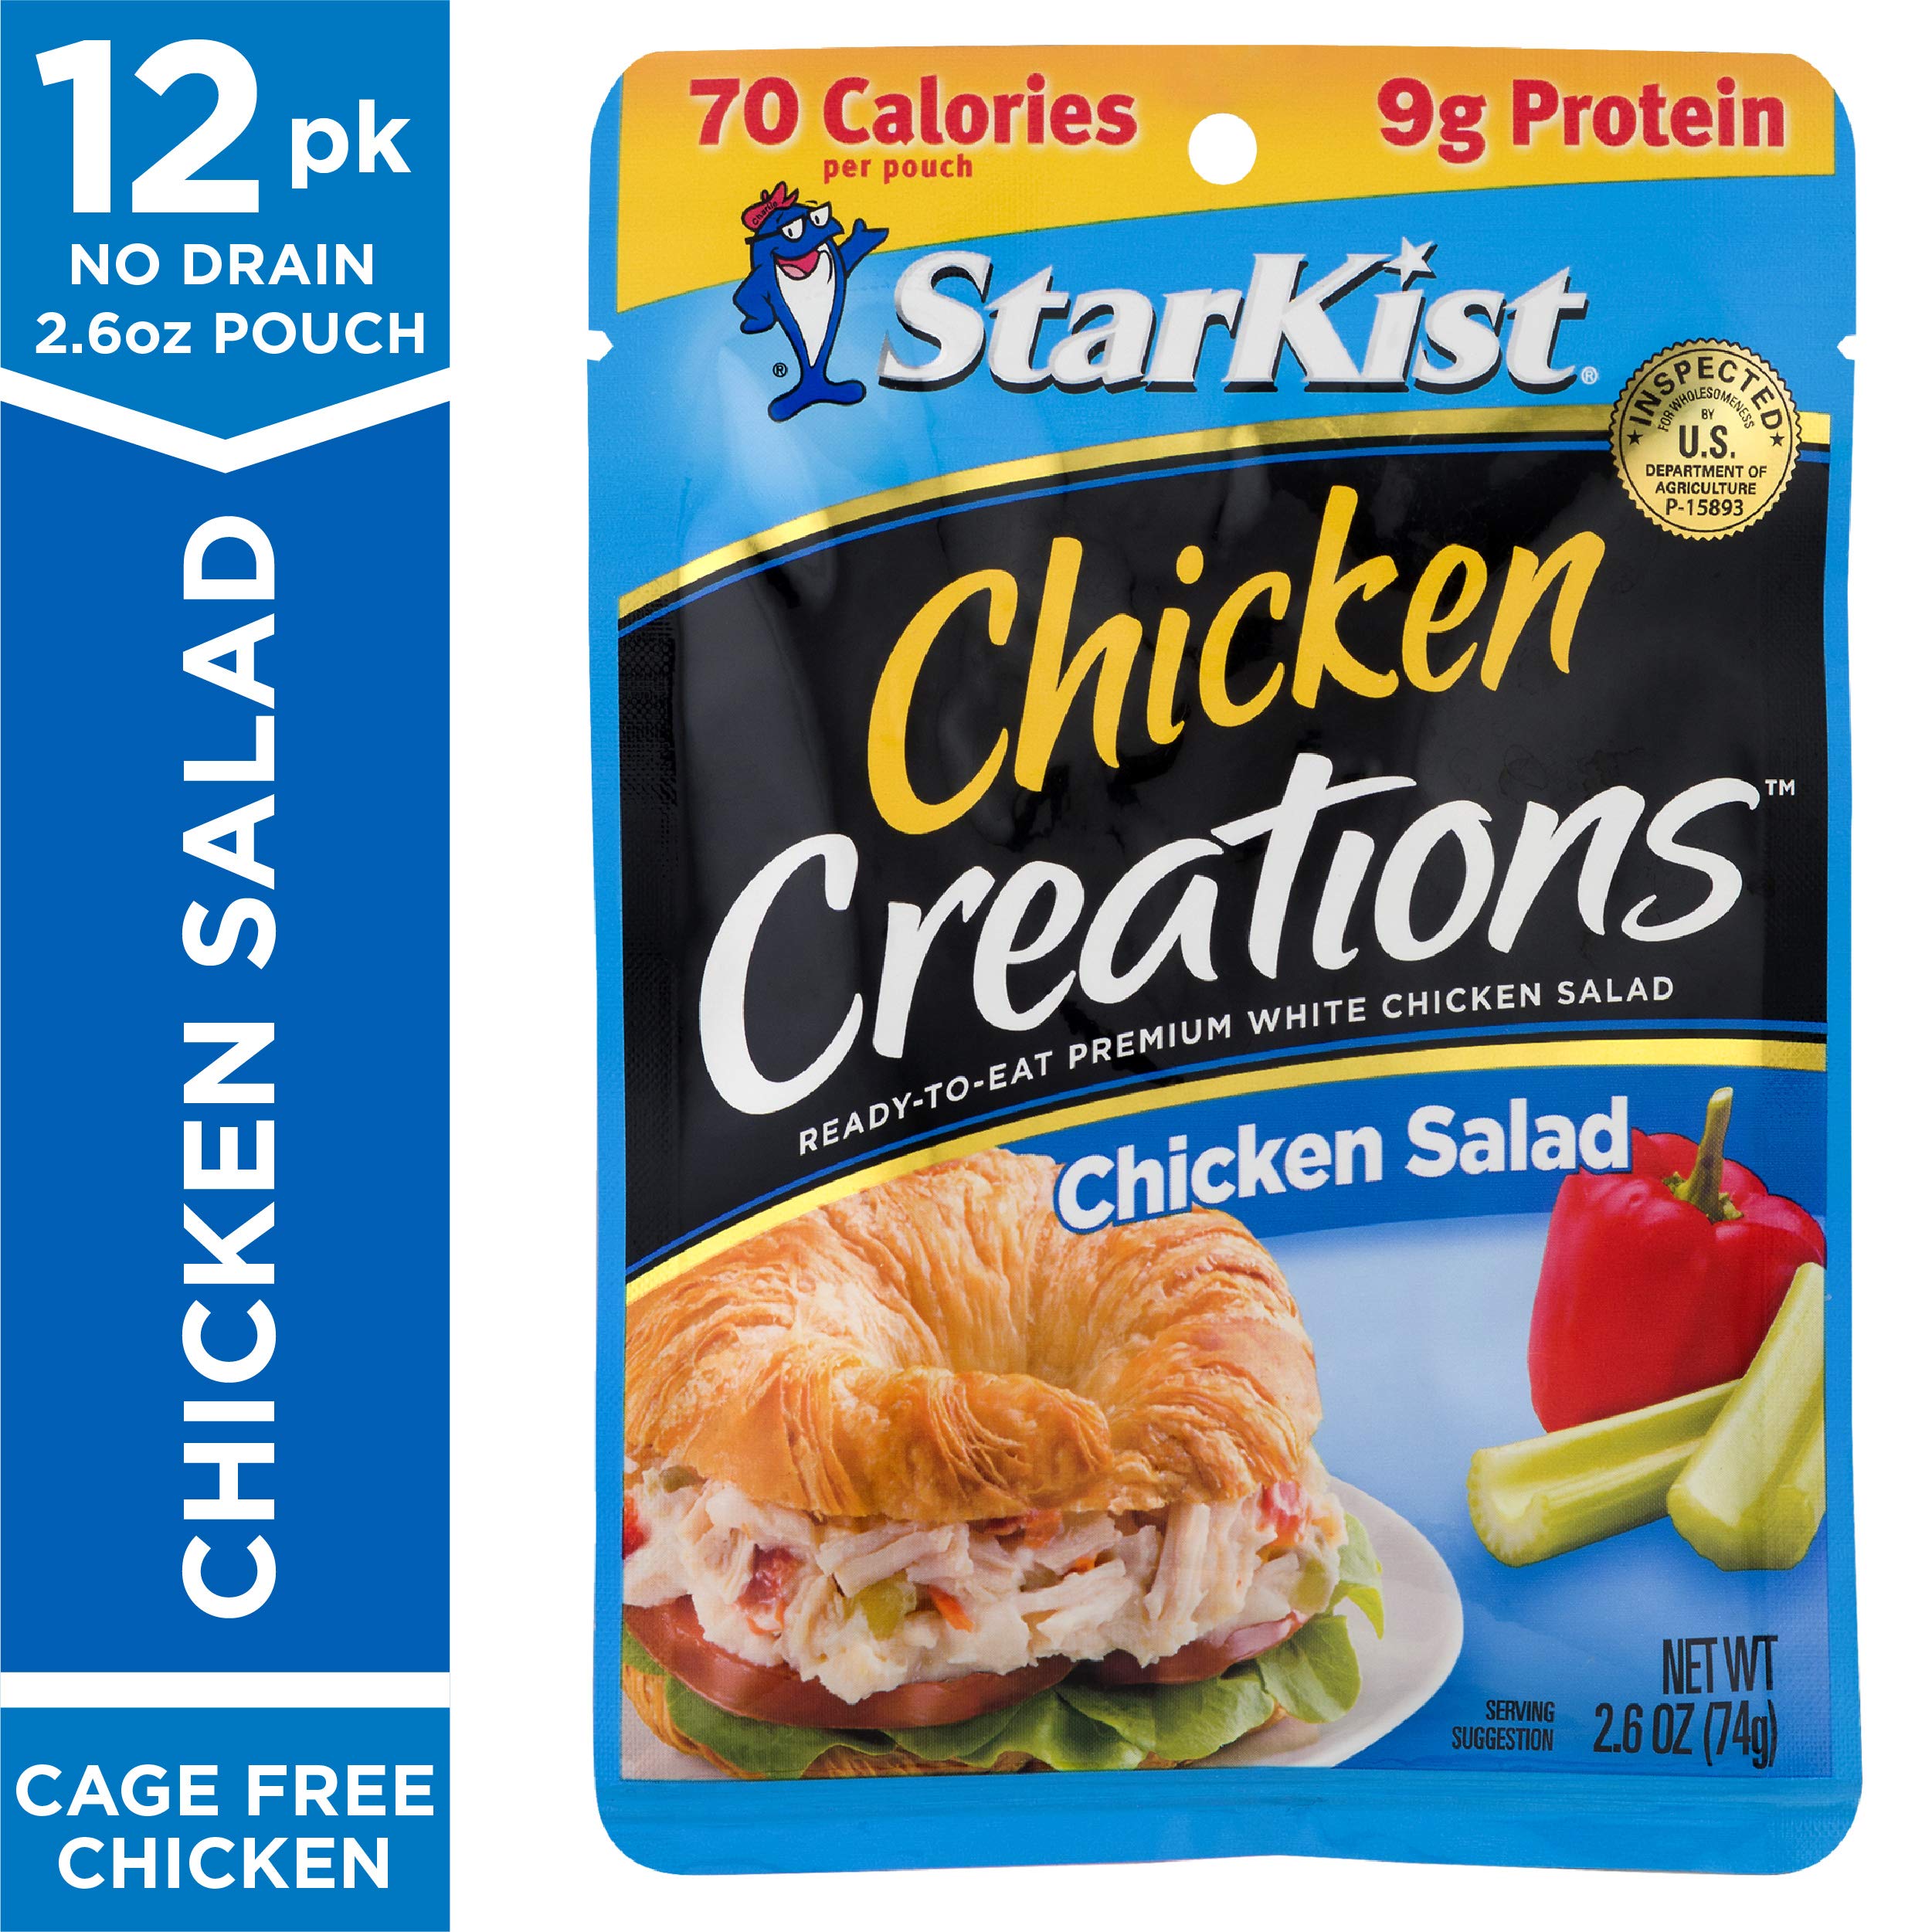 StarKist Salmon Creations Lemon Dill Pouches (12 Pack) and StarKist Chicken Creations Chicken Salad Pouches (12 Pack)